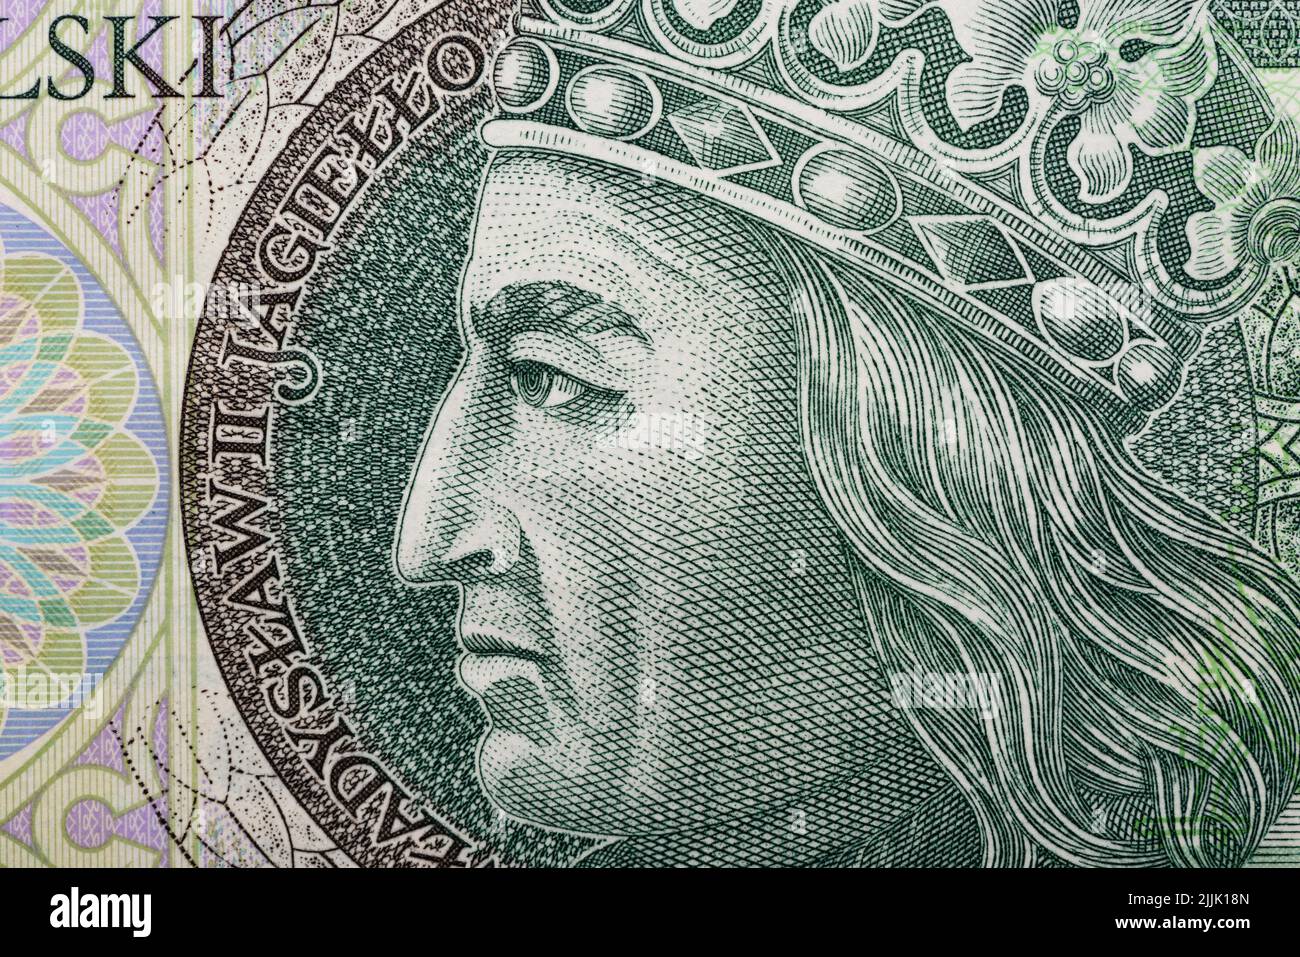 Macro of polish paper currency bill of 100 zloty pln, portrait of king Jogaila, Wladyslaw II Jagiello Stock Photo